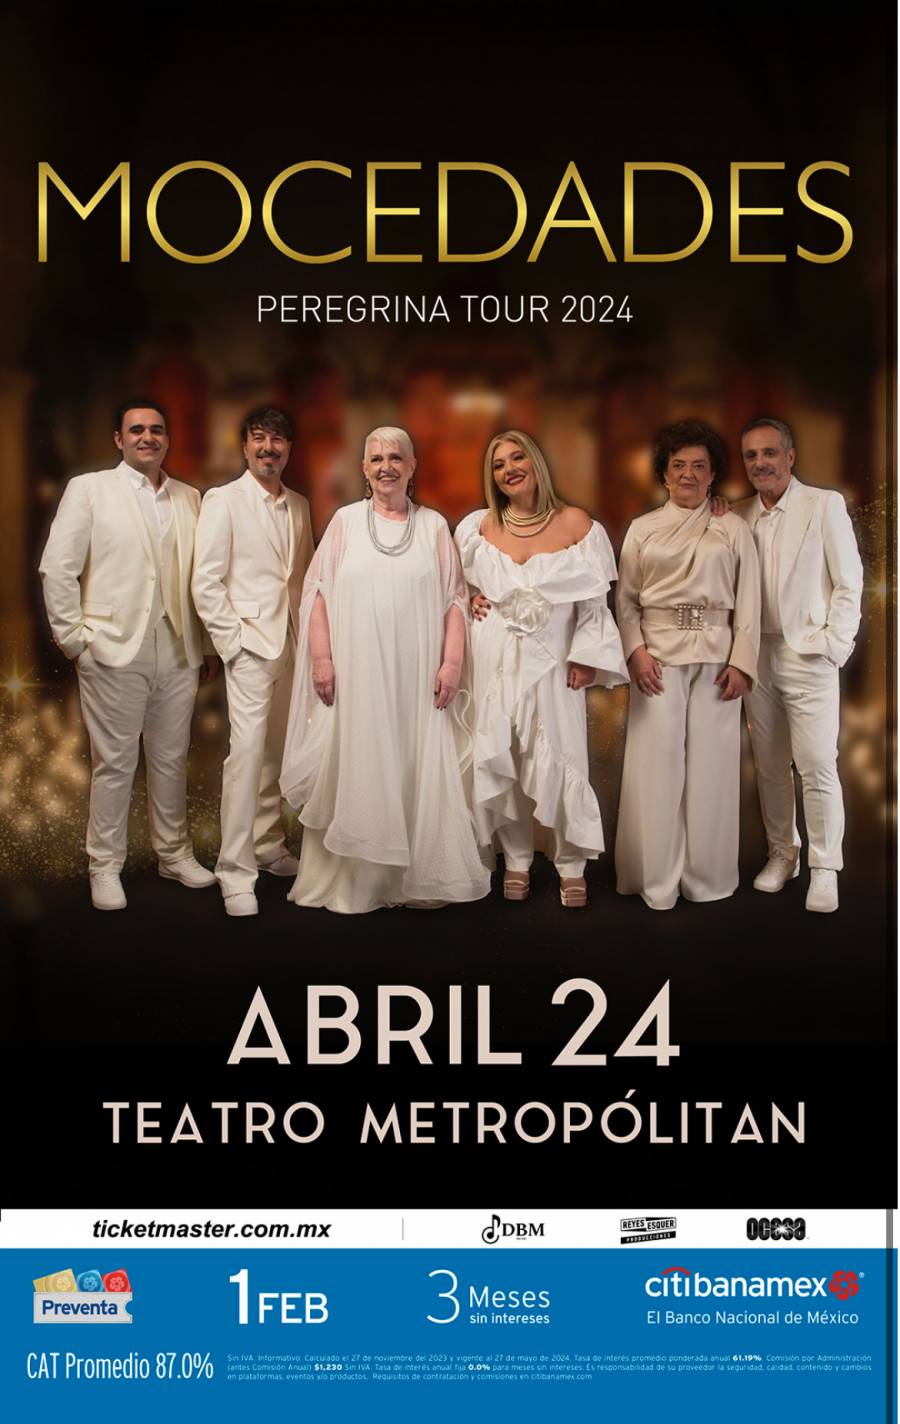 Mocedades vuelve a México con su nuevo tour 2024